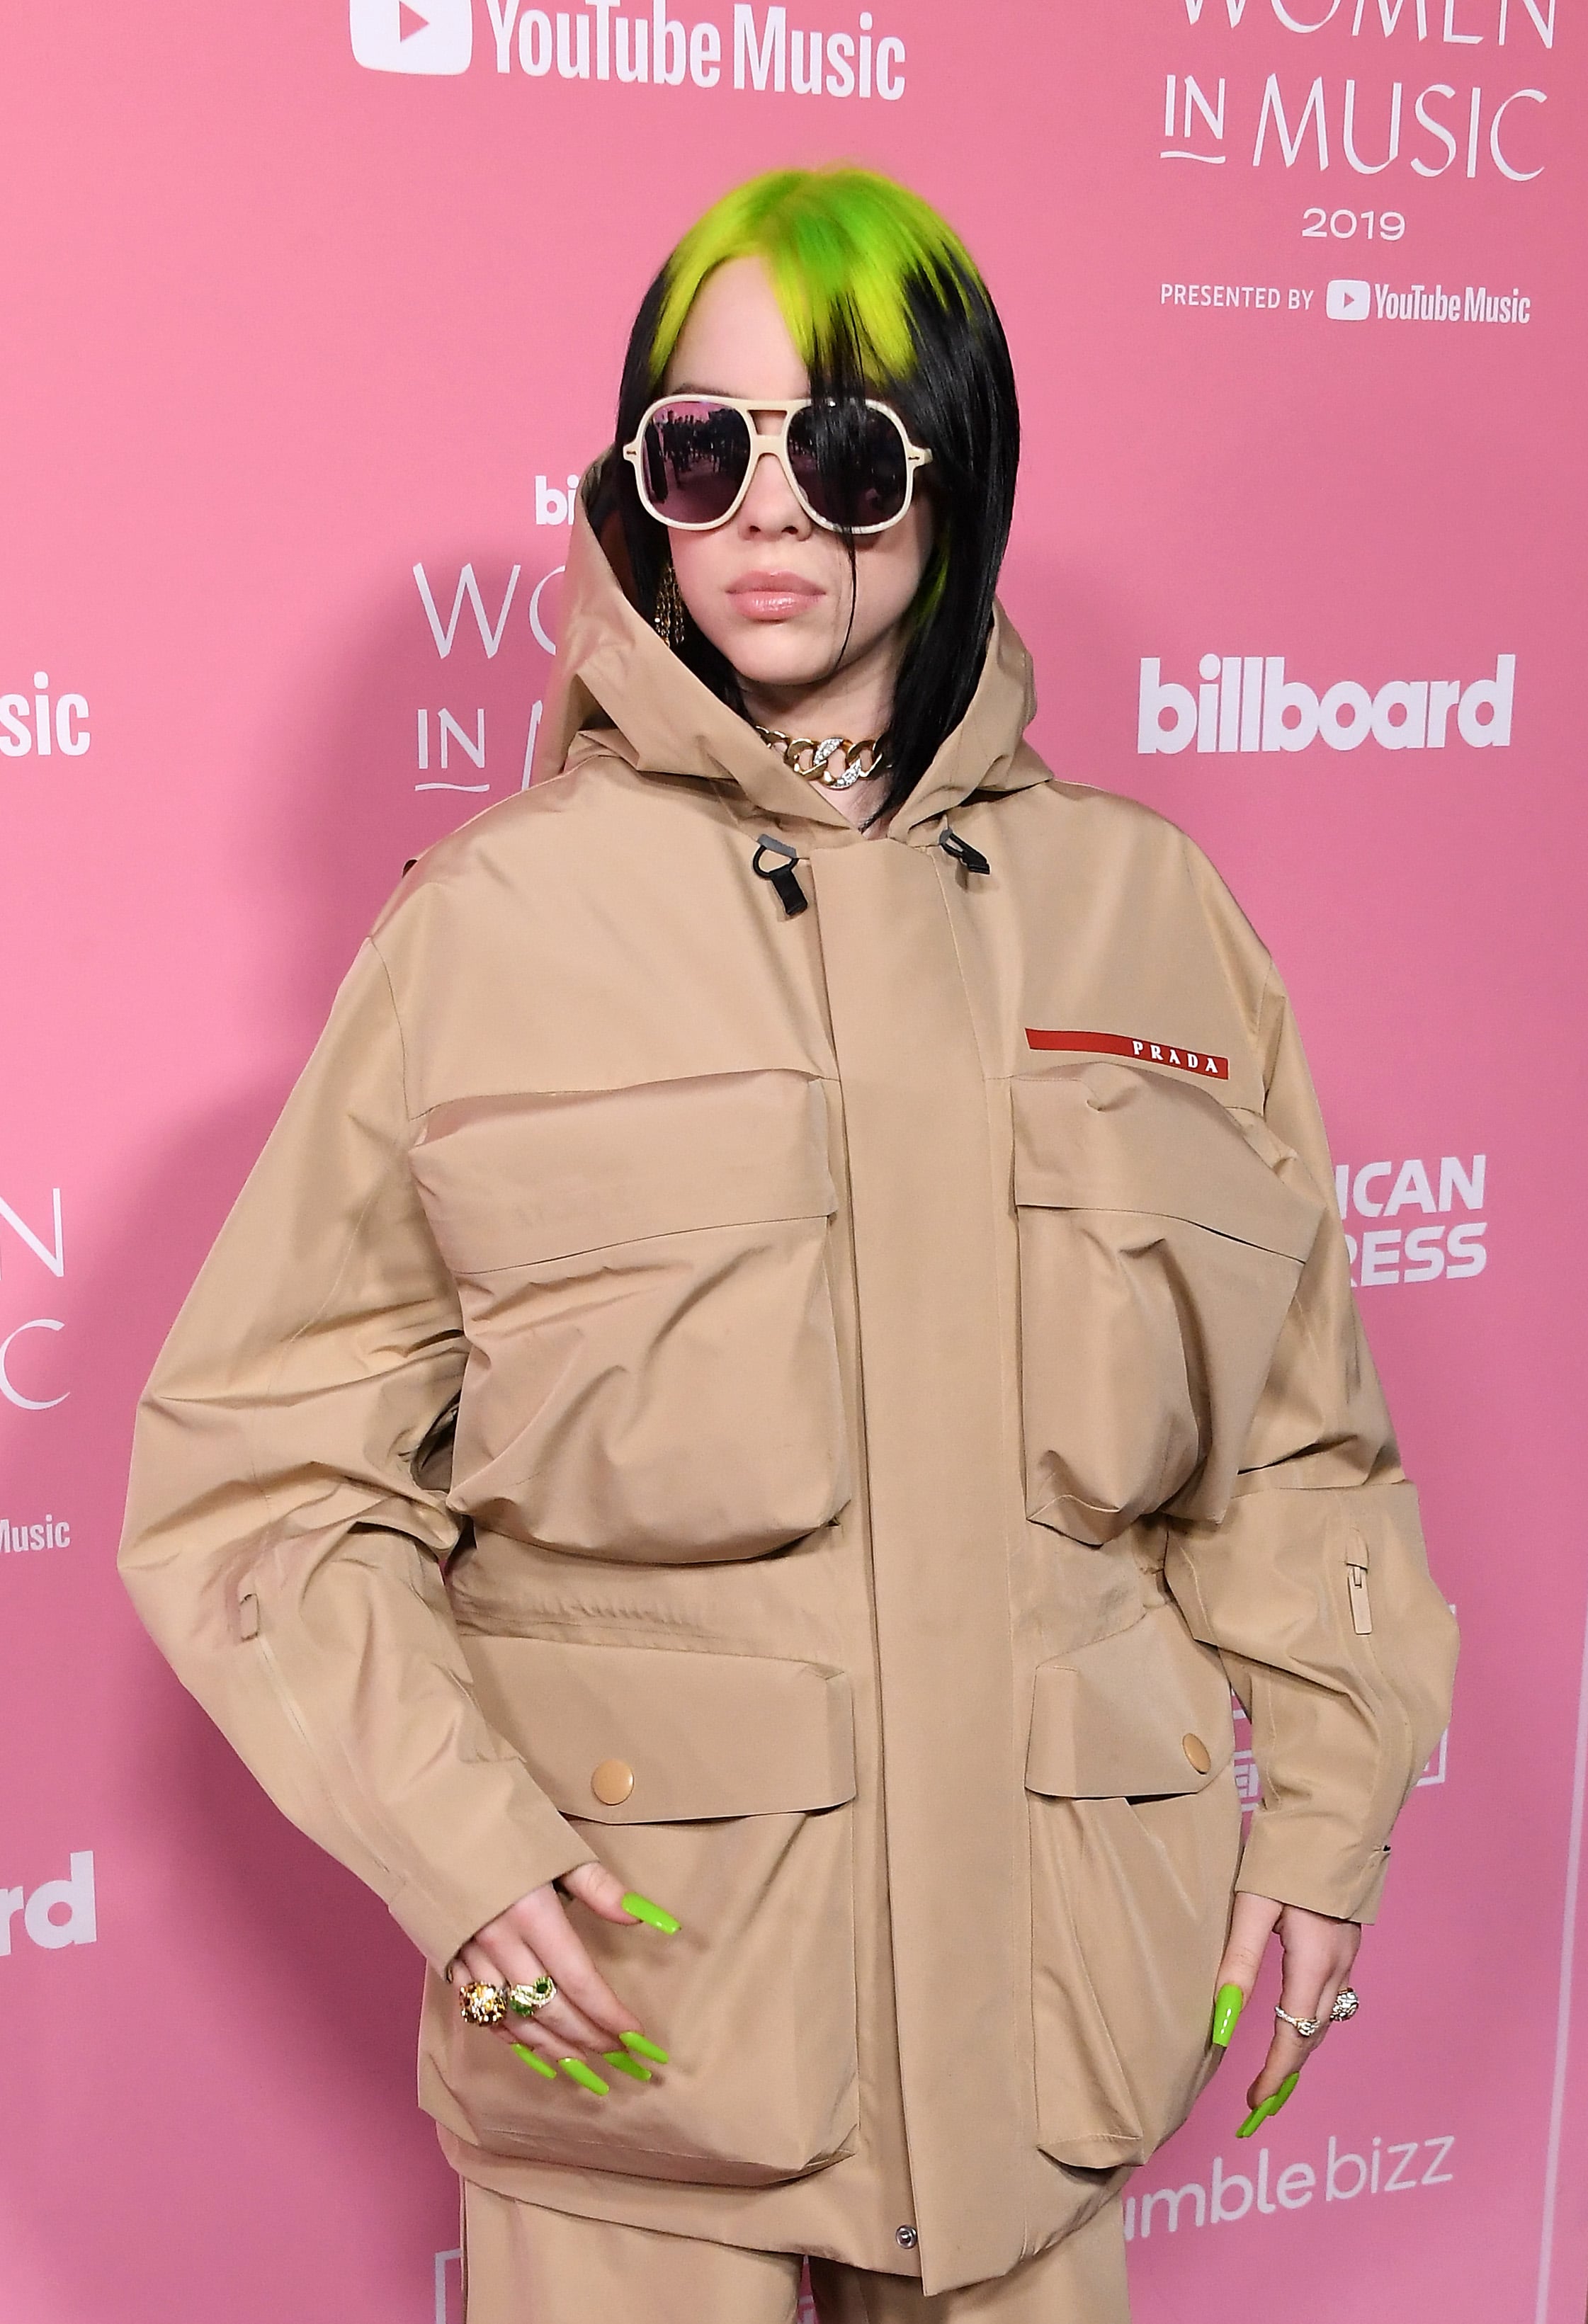 Billie Eilish Reveals Artists Who Have Inspired Her – Billboard